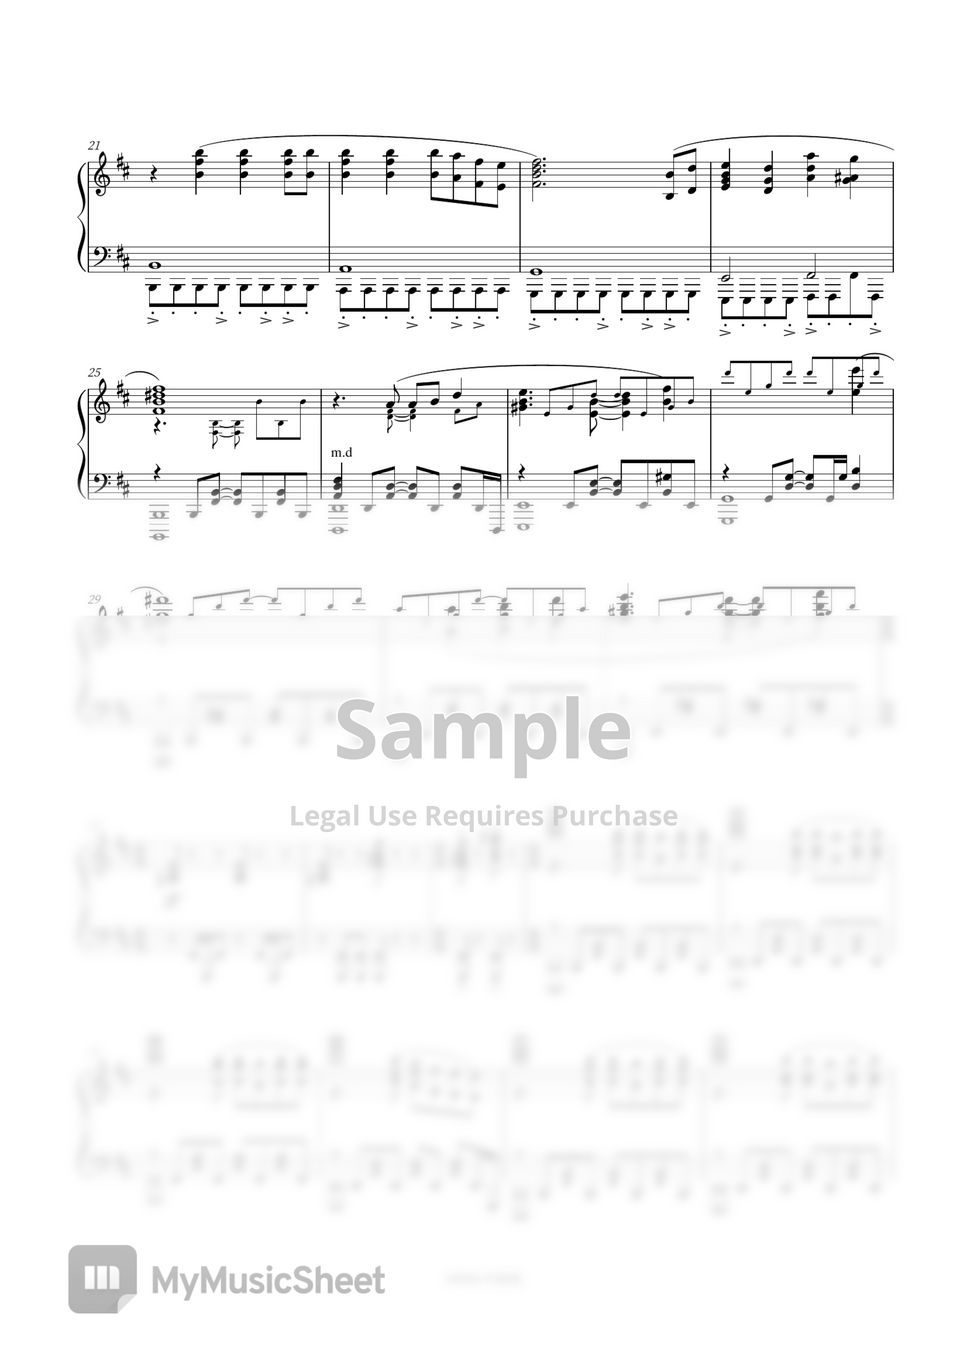 1 – mob choir Mob Psycho 100 III Opening - 1 Sheet music for Piano (Solo)